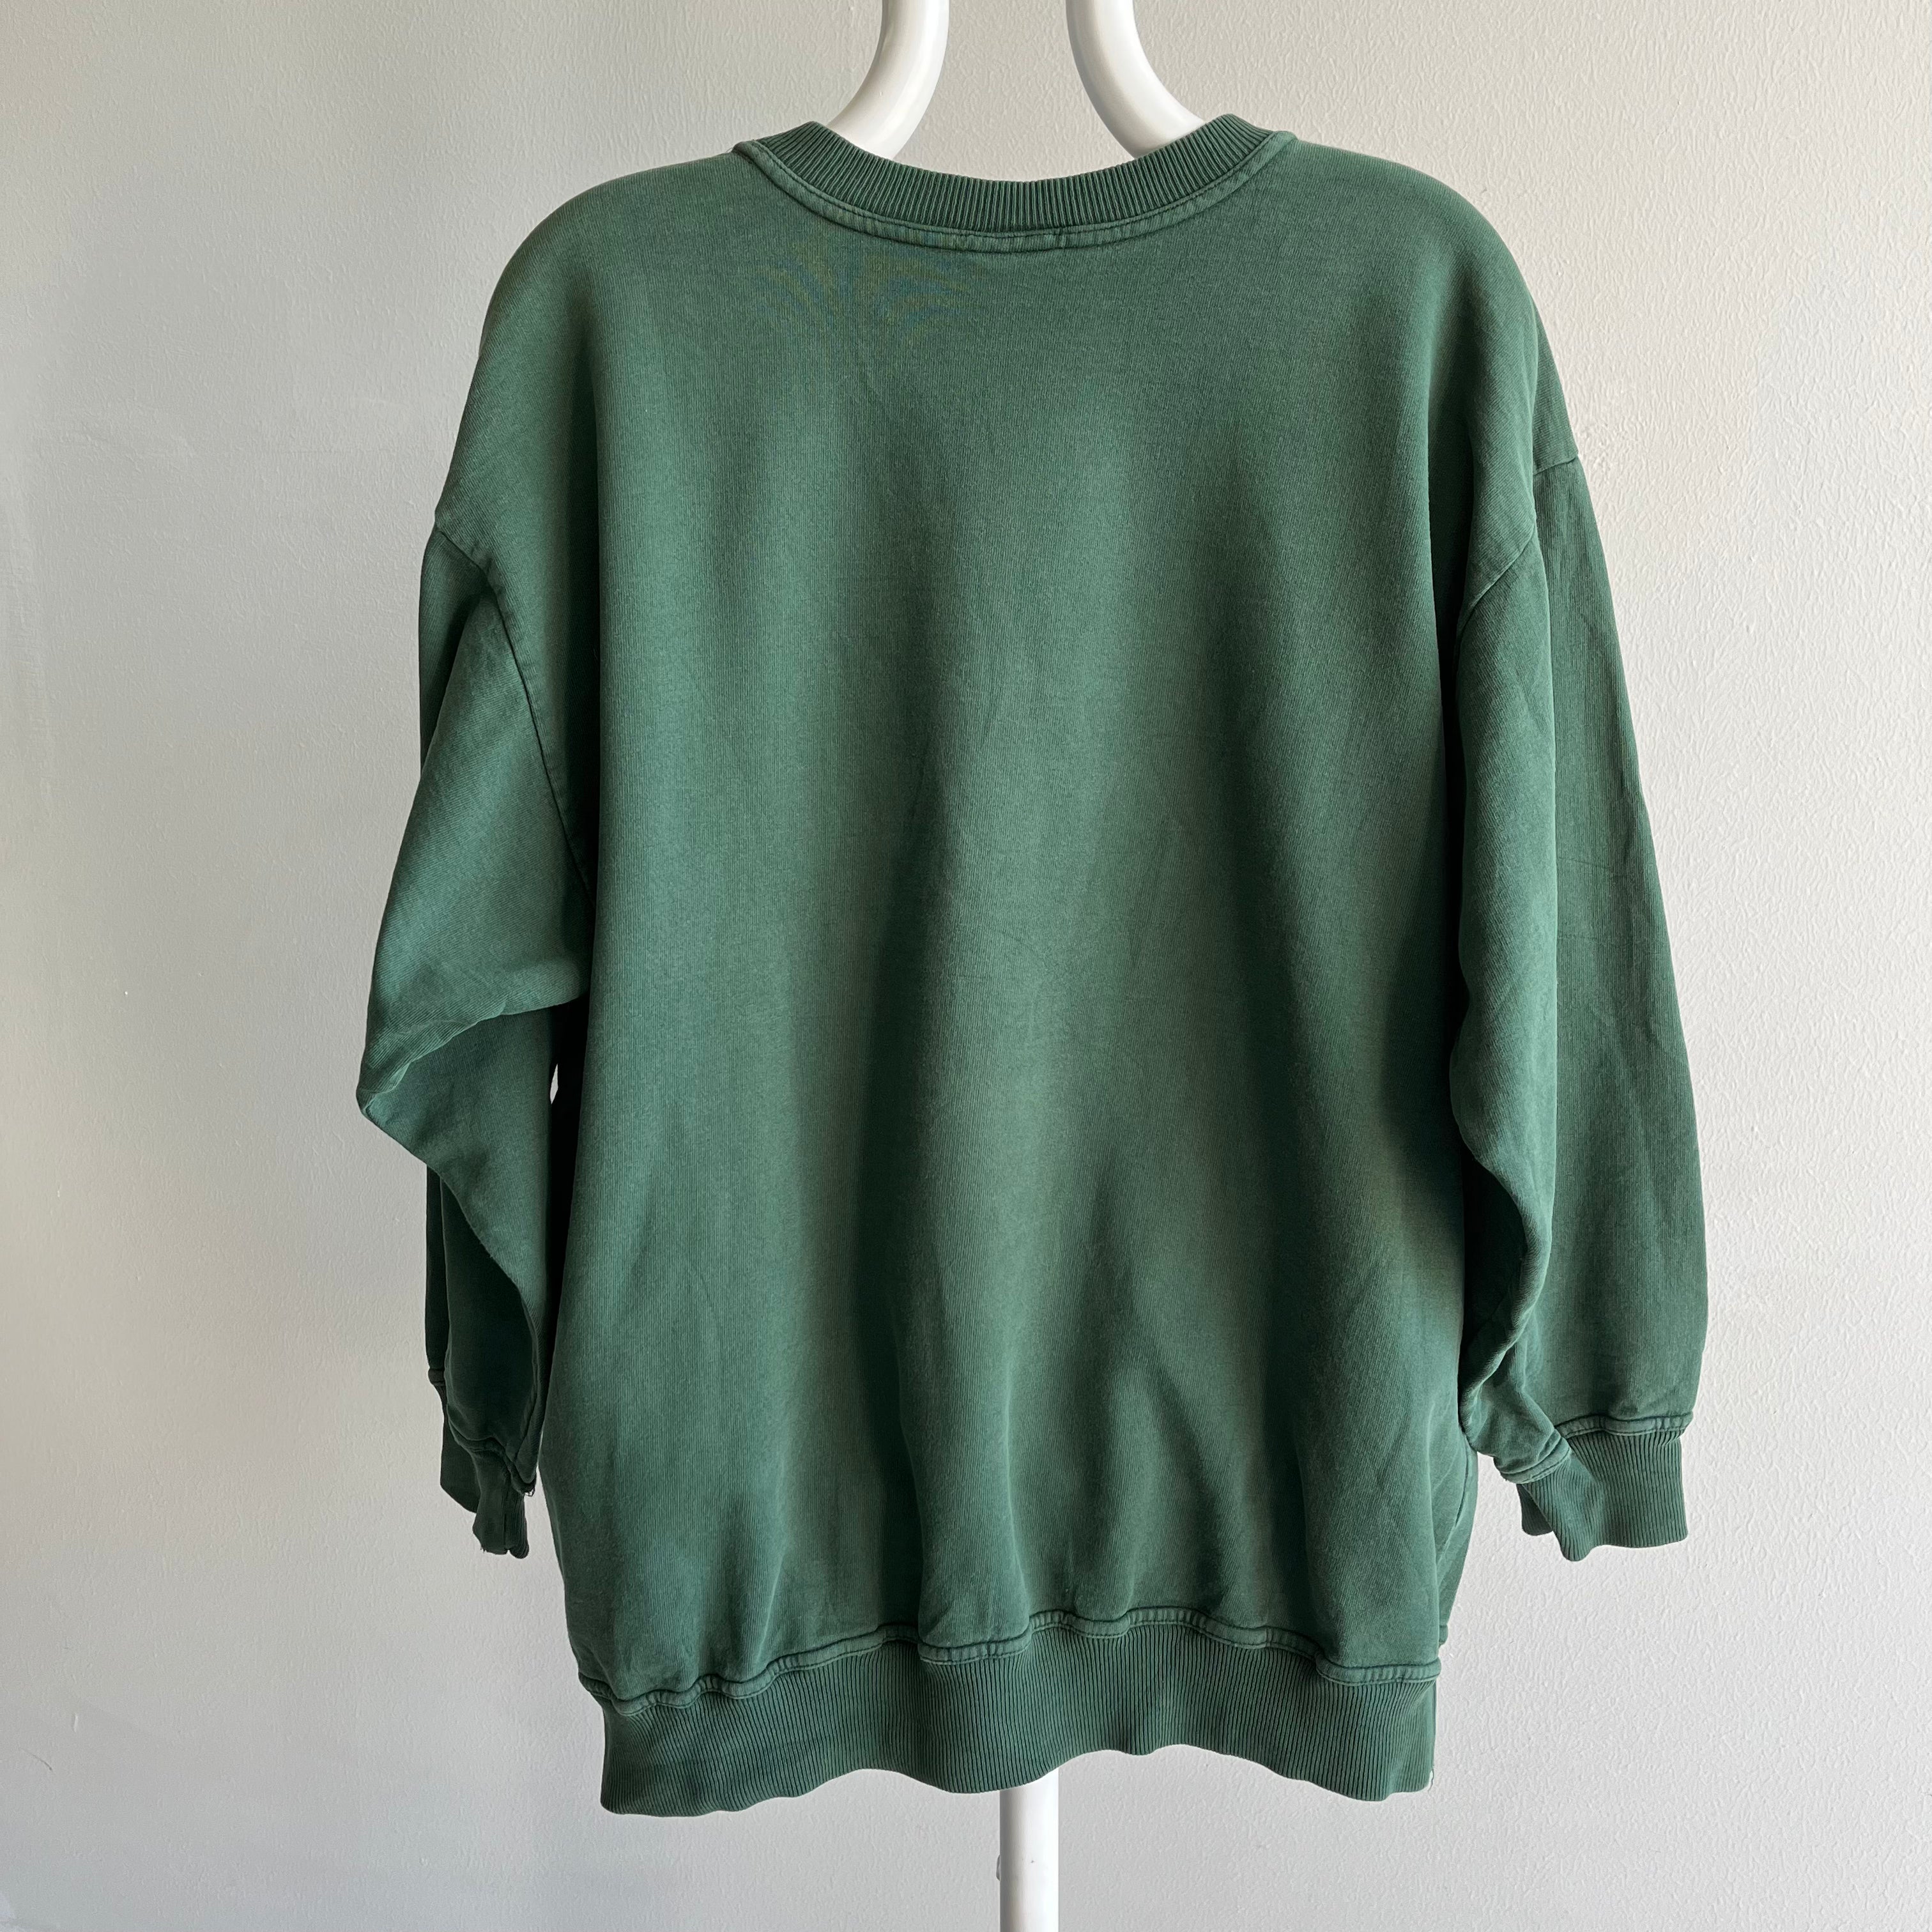 1980/90s Bongo Long Sleeve Green T-Shirt - Who Remembers??